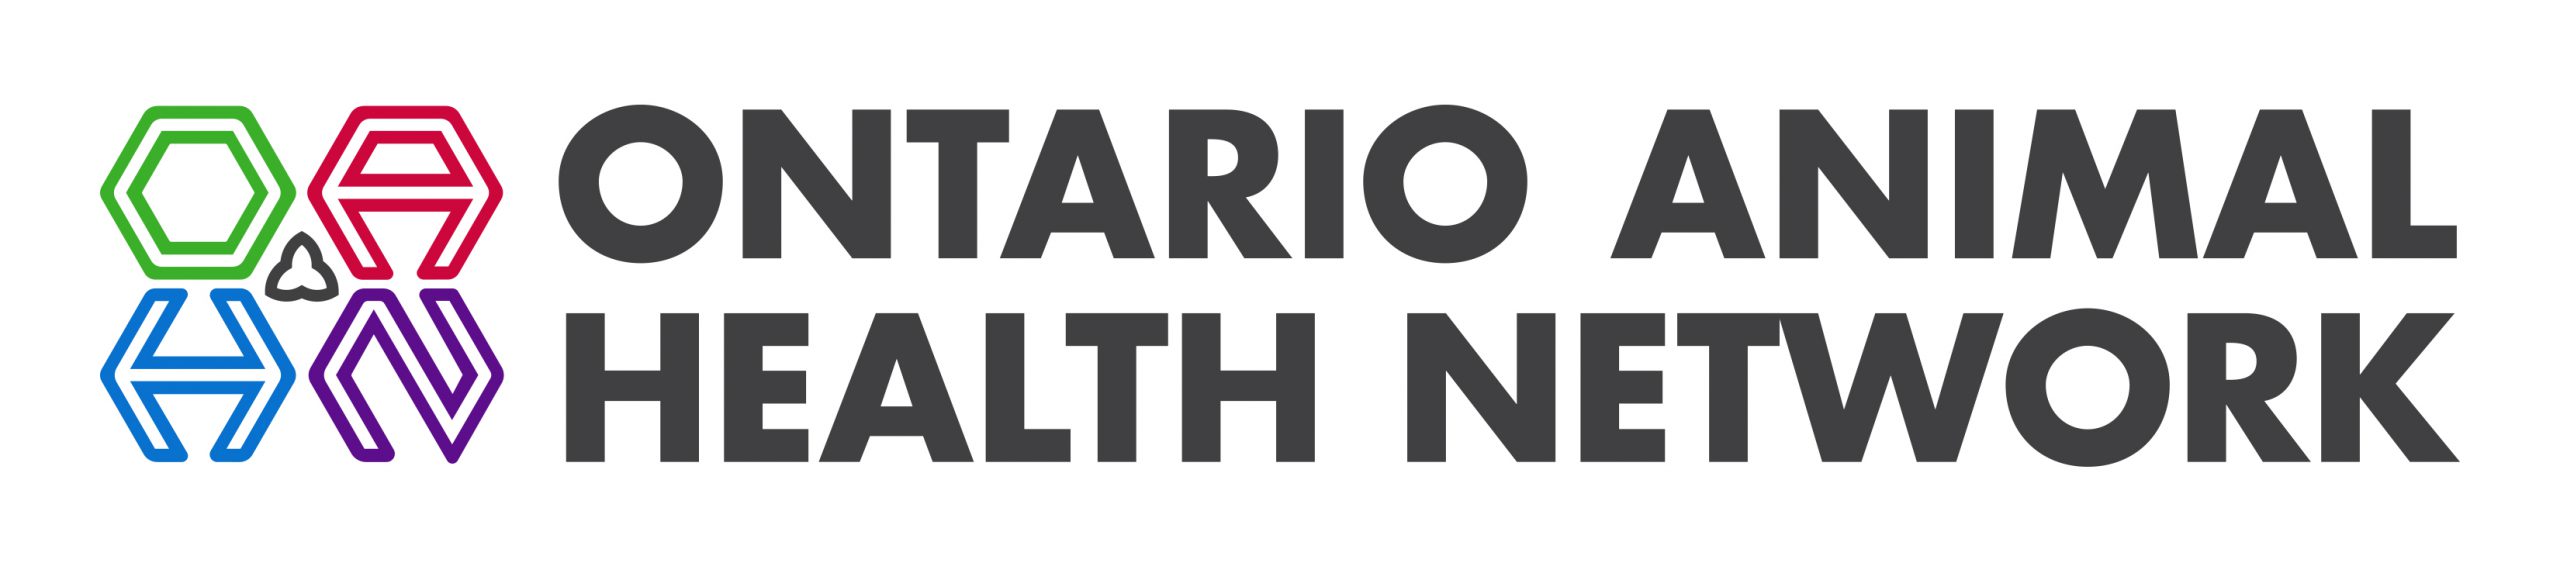 Ontario Animal Health Network